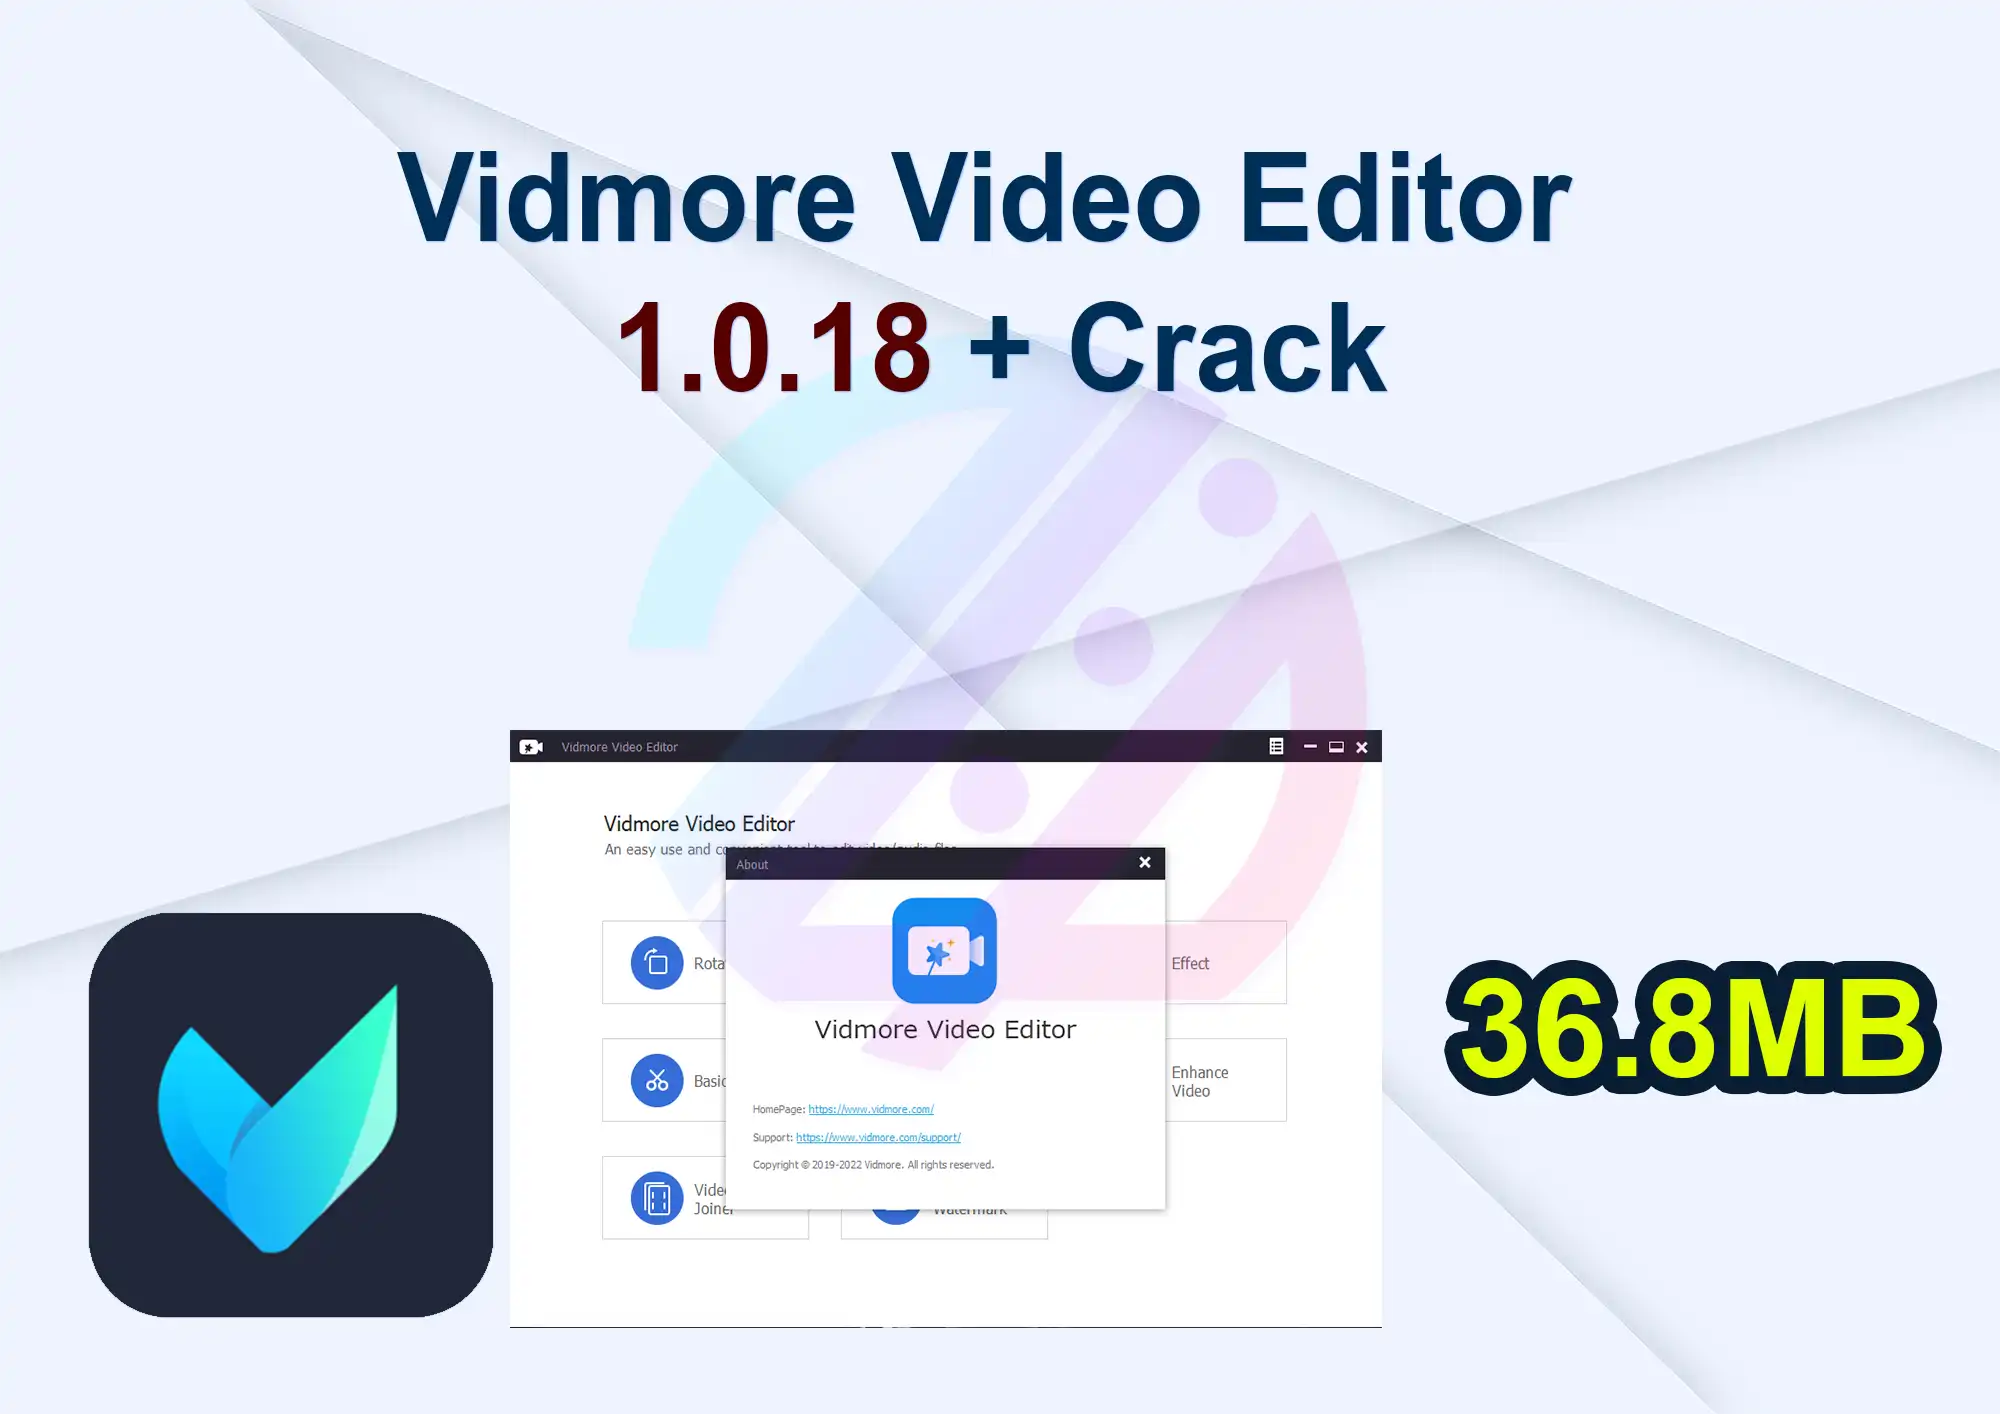 Vidmore Video Editor 1.0.18 + Crack